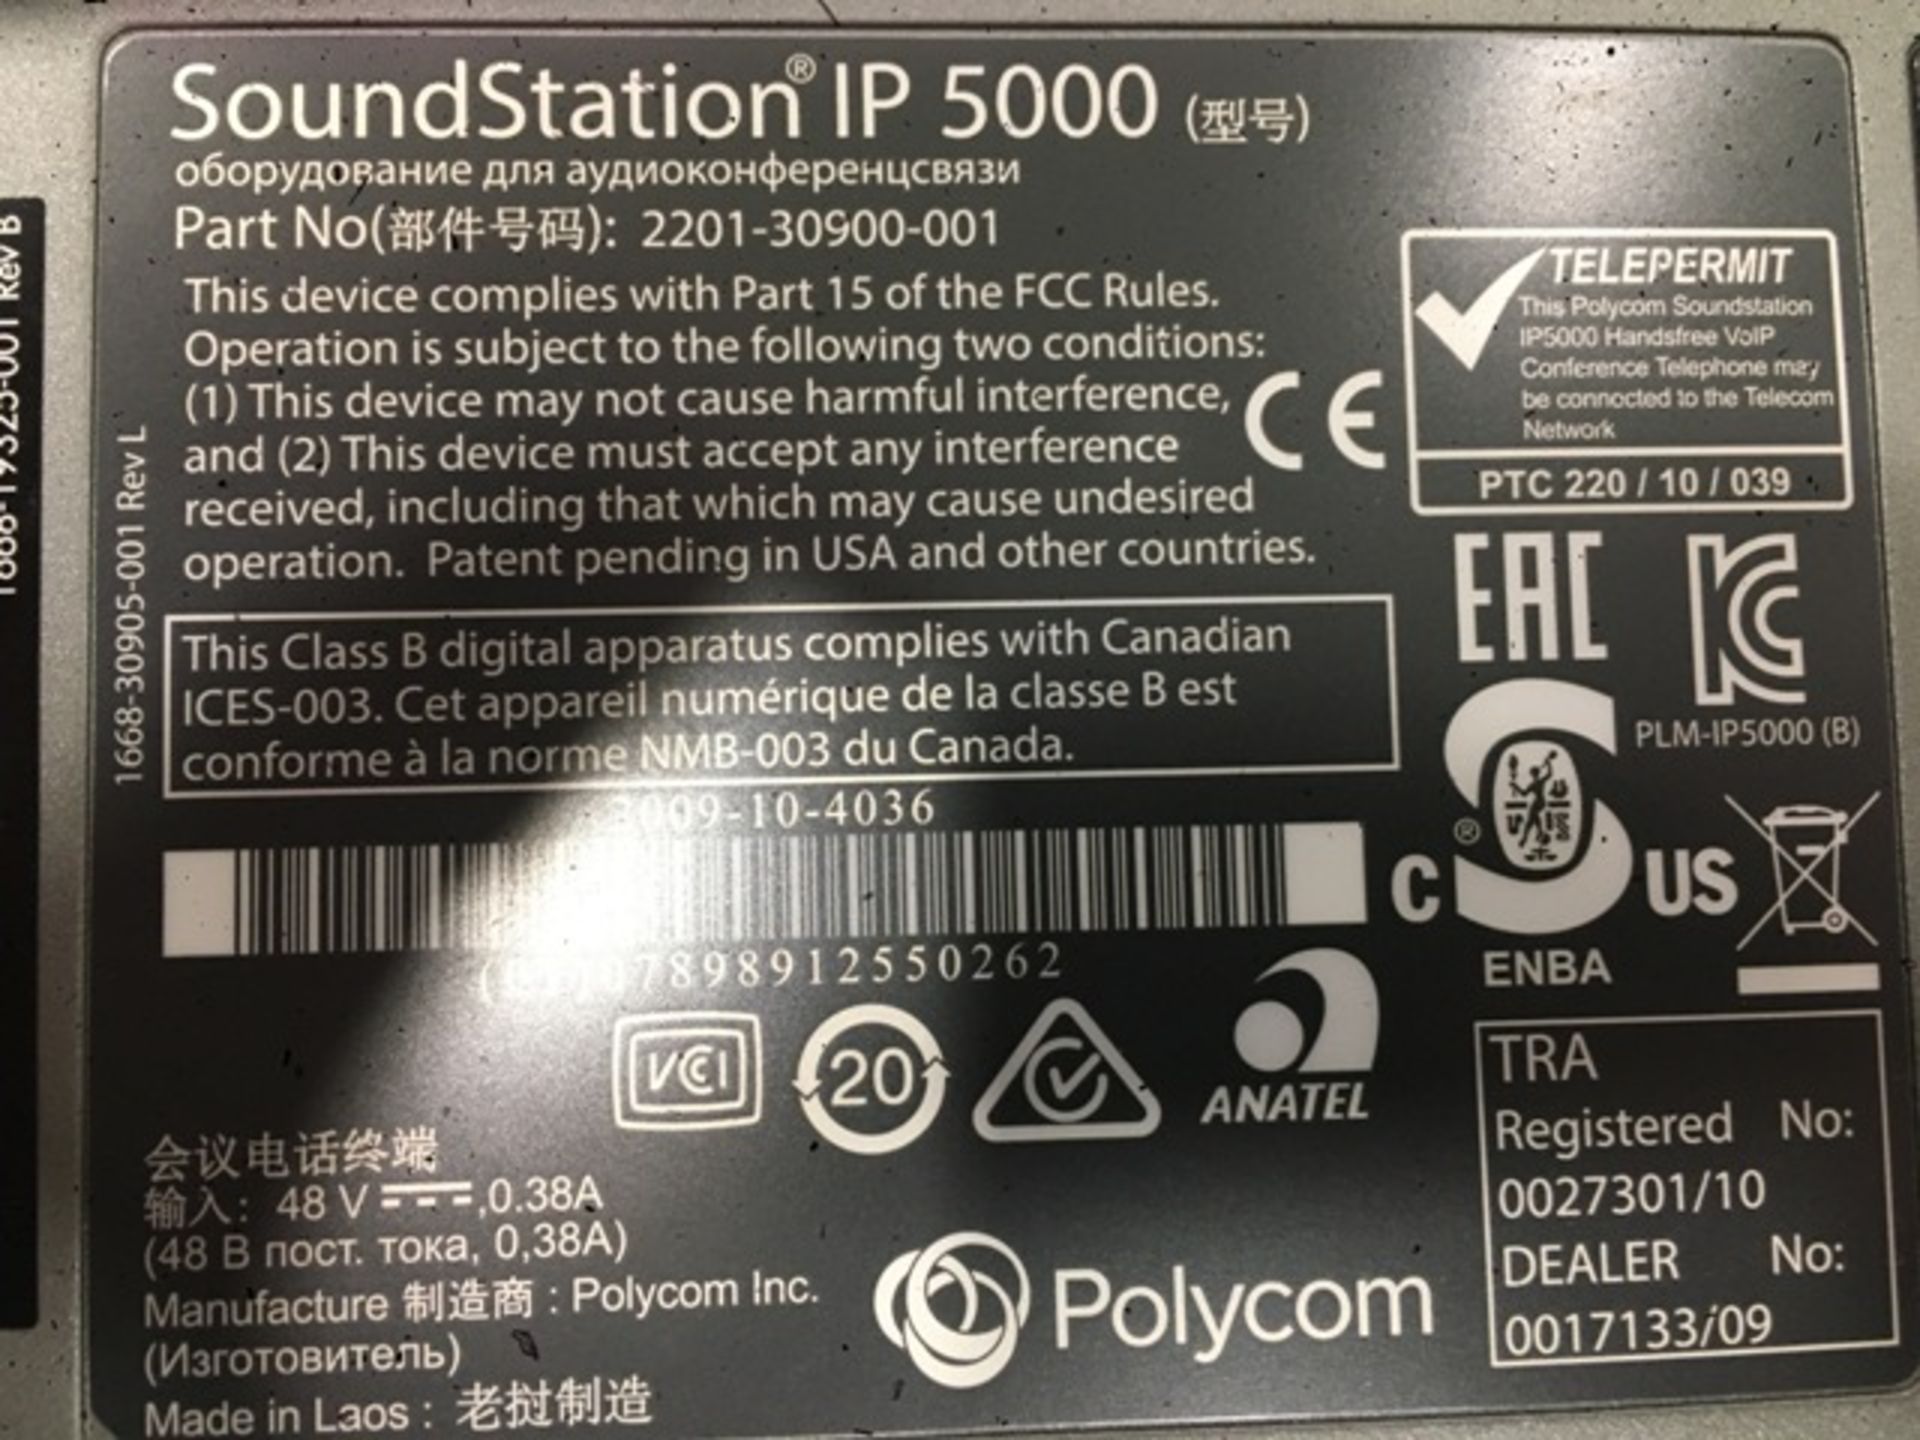 Polycom Soundstation IP 5000 conference phone - Image 2 of 2